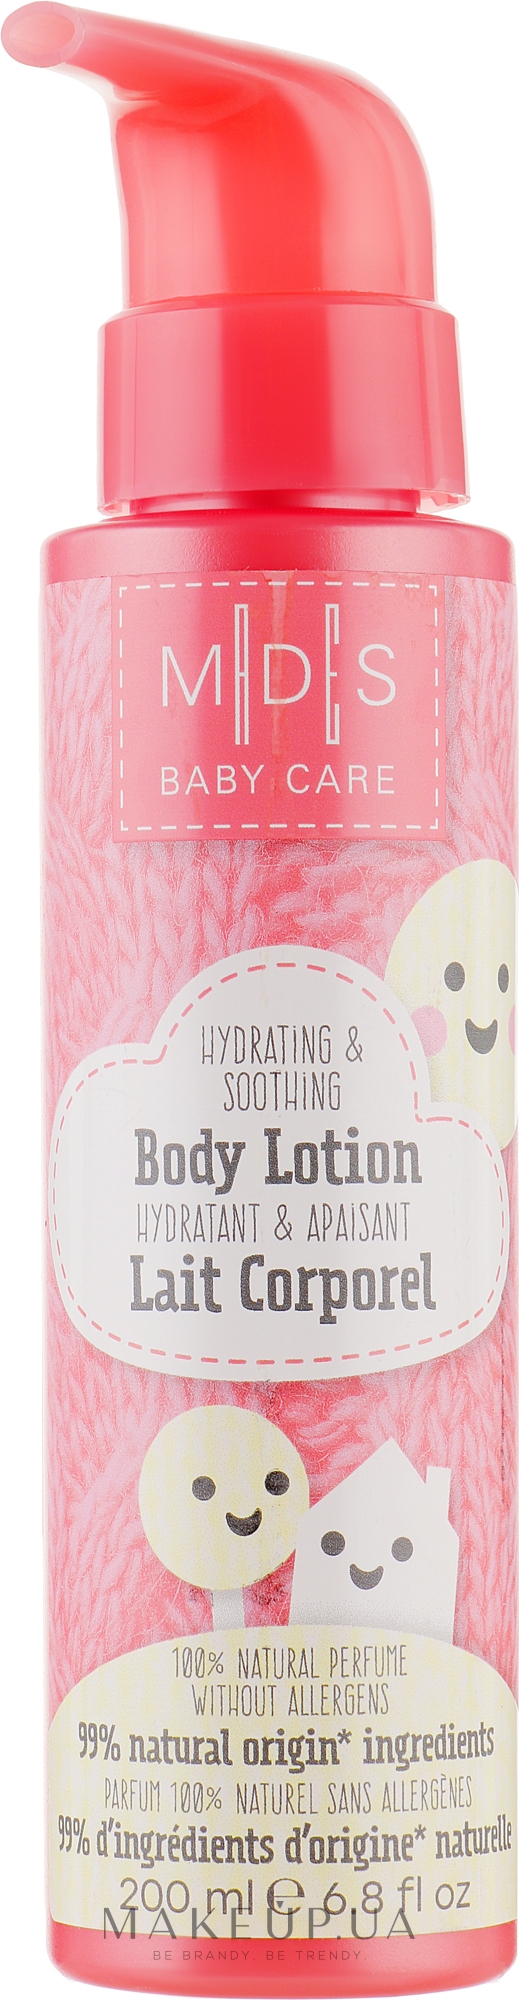 Органический гипоаллергенный лосьон для кожи младенцев - Mades Cosmetics M|D|S Baby Care Body Lotion — фото 200ml